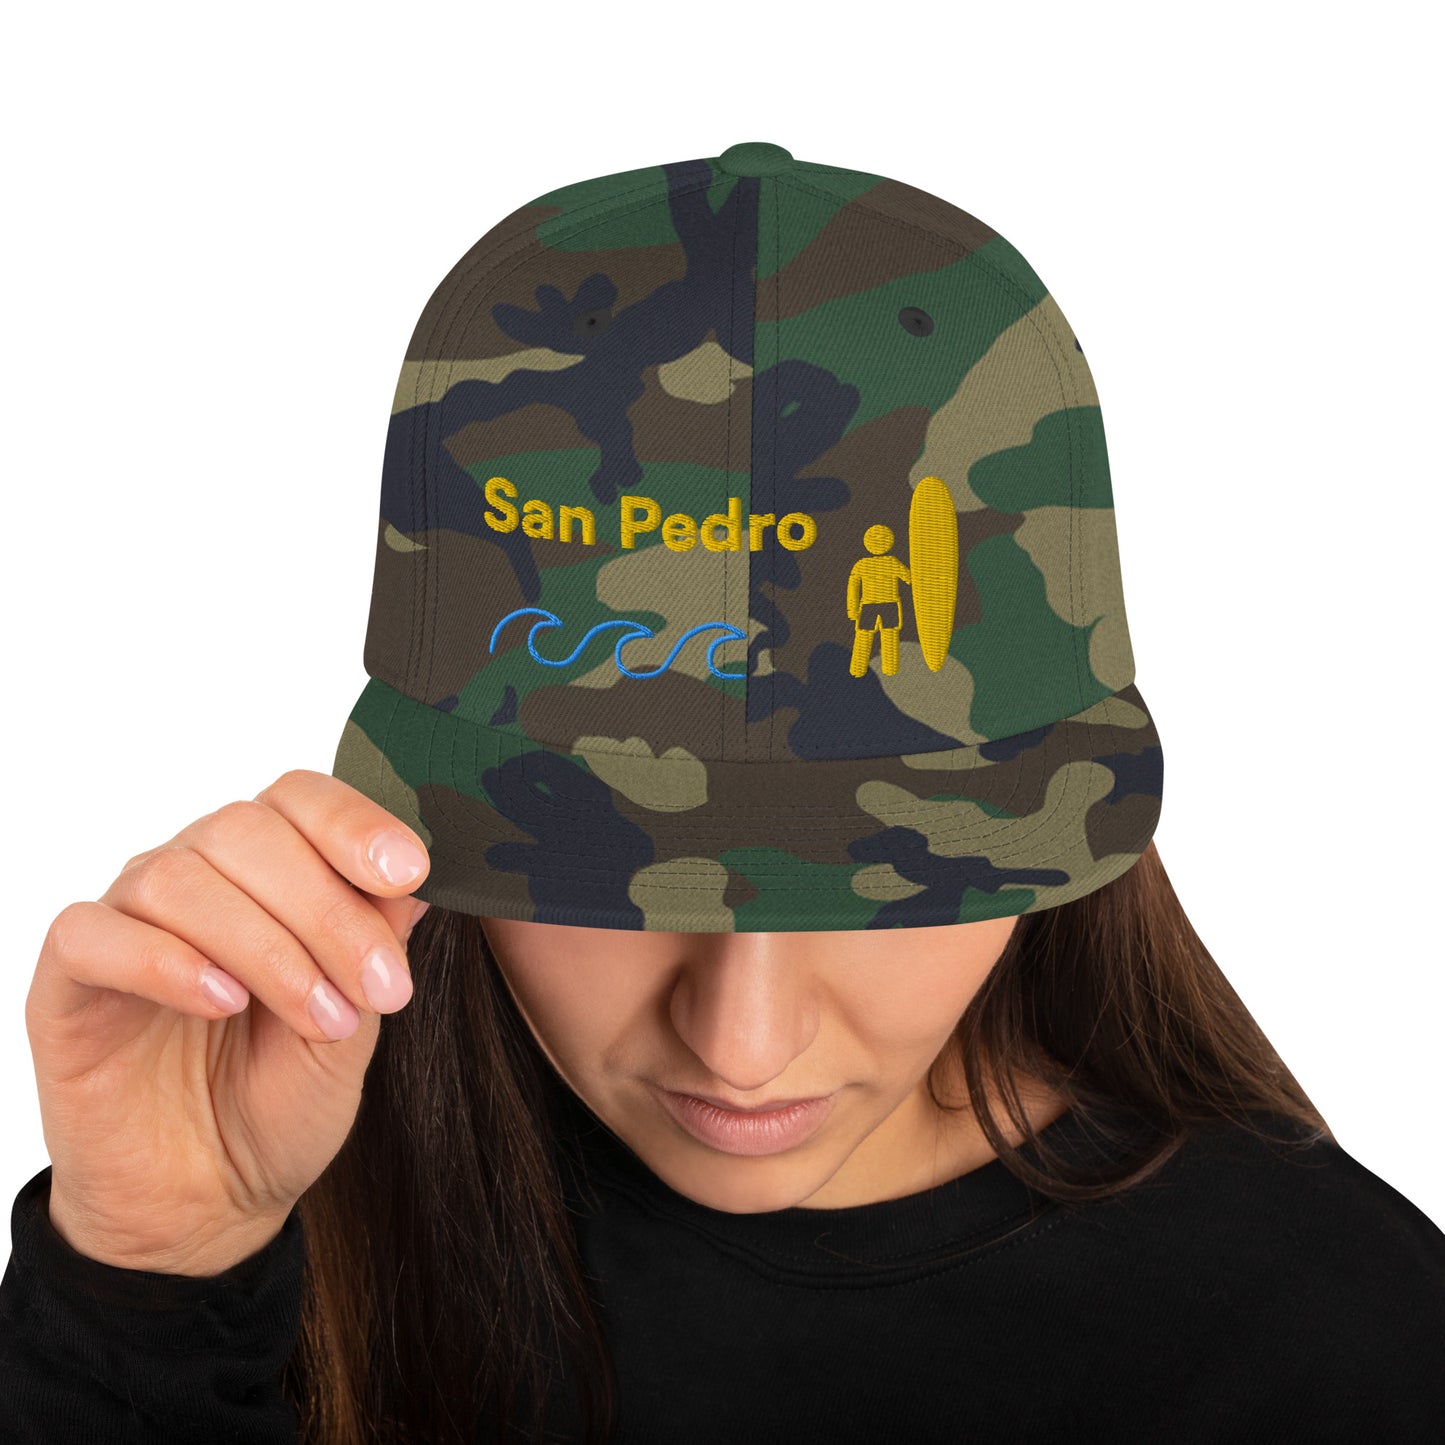 San Pedro  - California - South Bay - Snapback Hat - Surfing Style